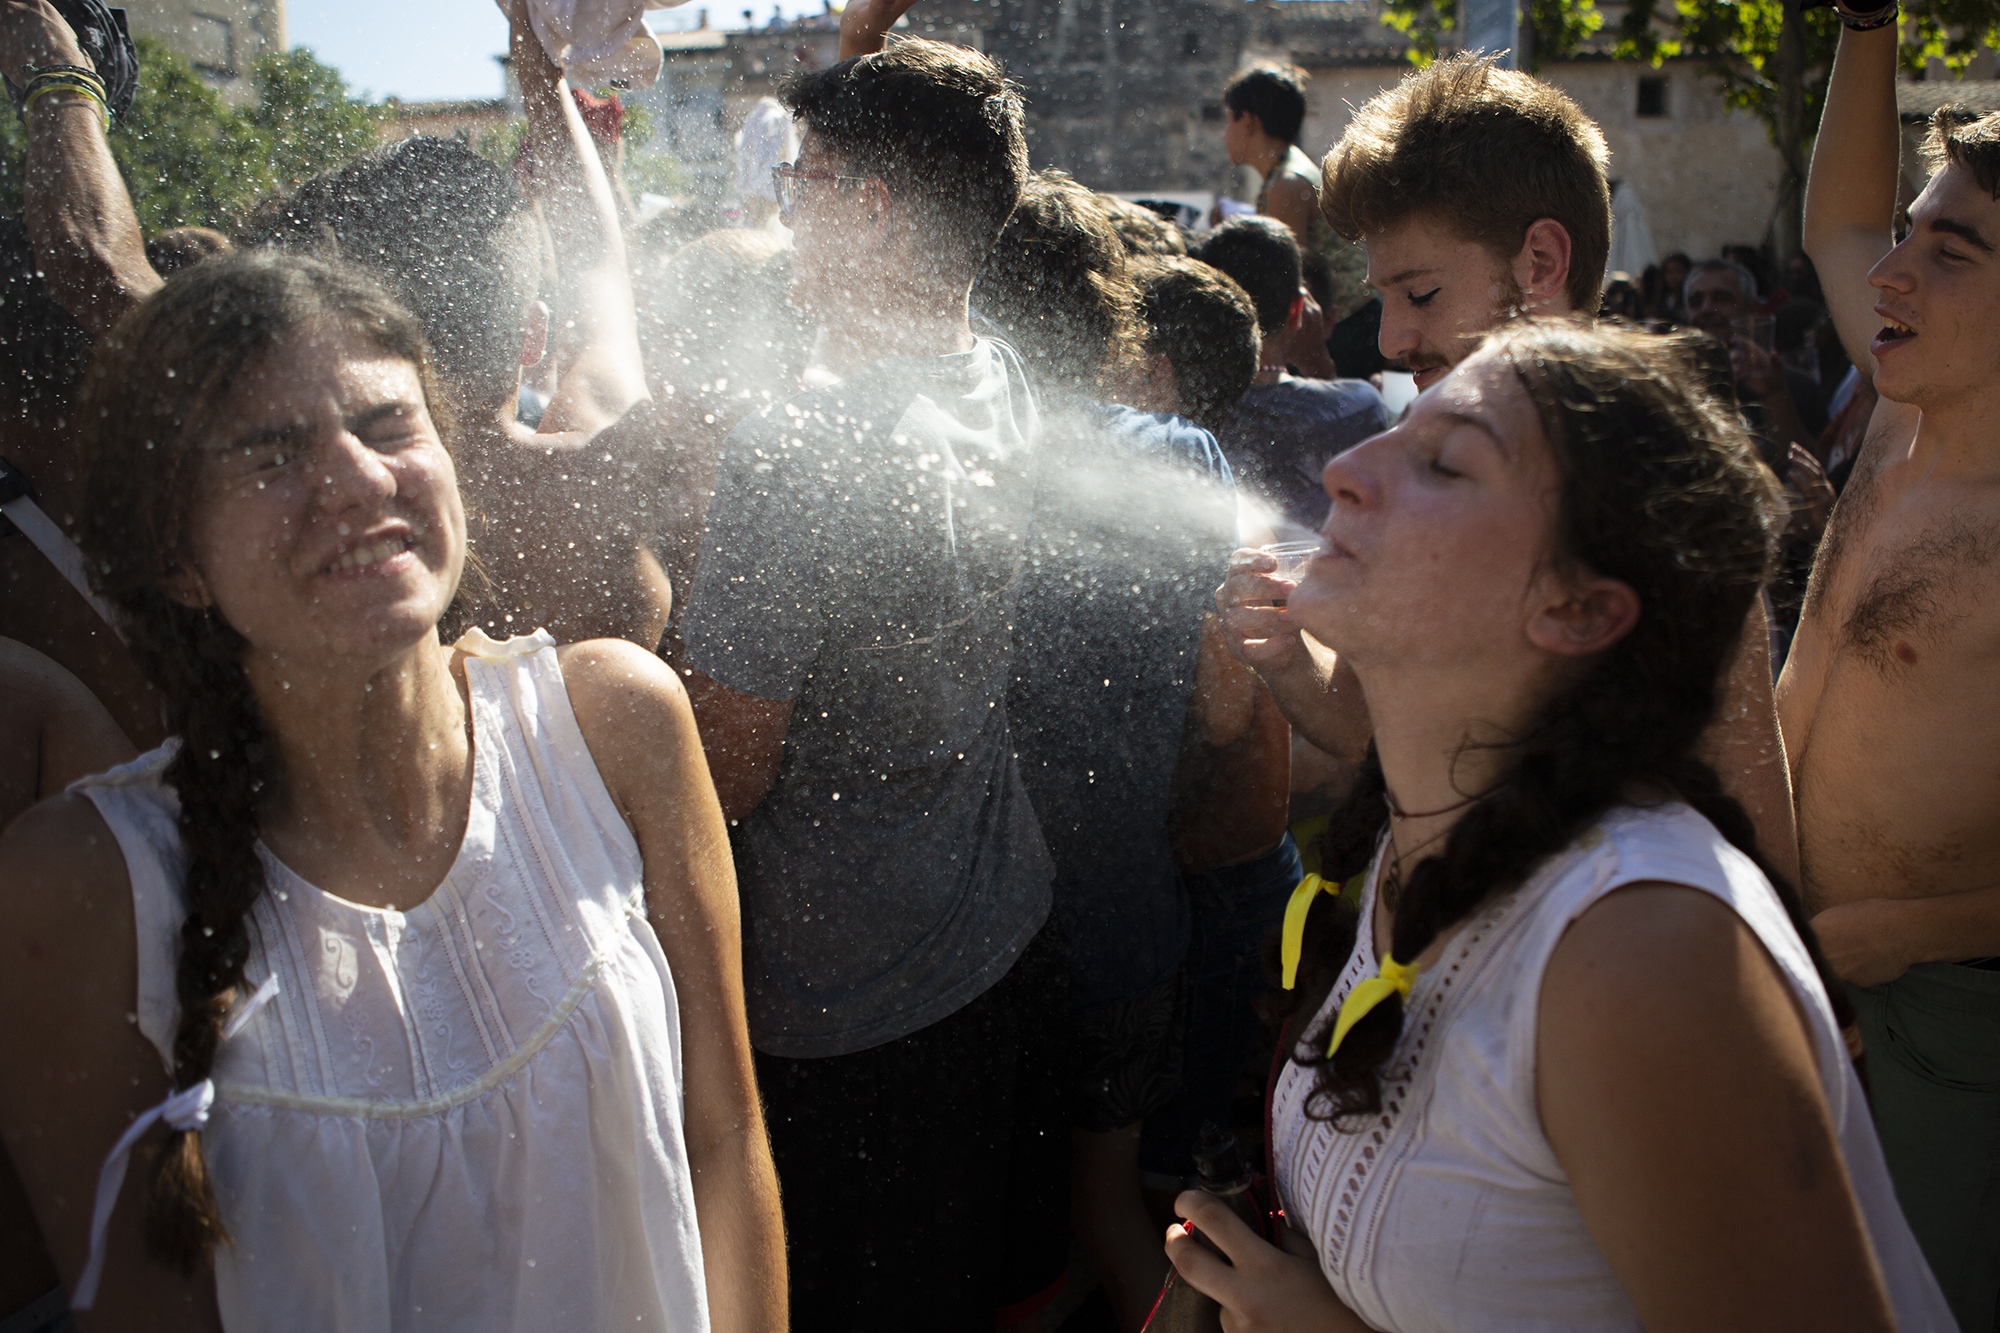 Llucia spray out her friend to battle the heat. Pollen&ccedil;a, Mallorca, August 2 2019.